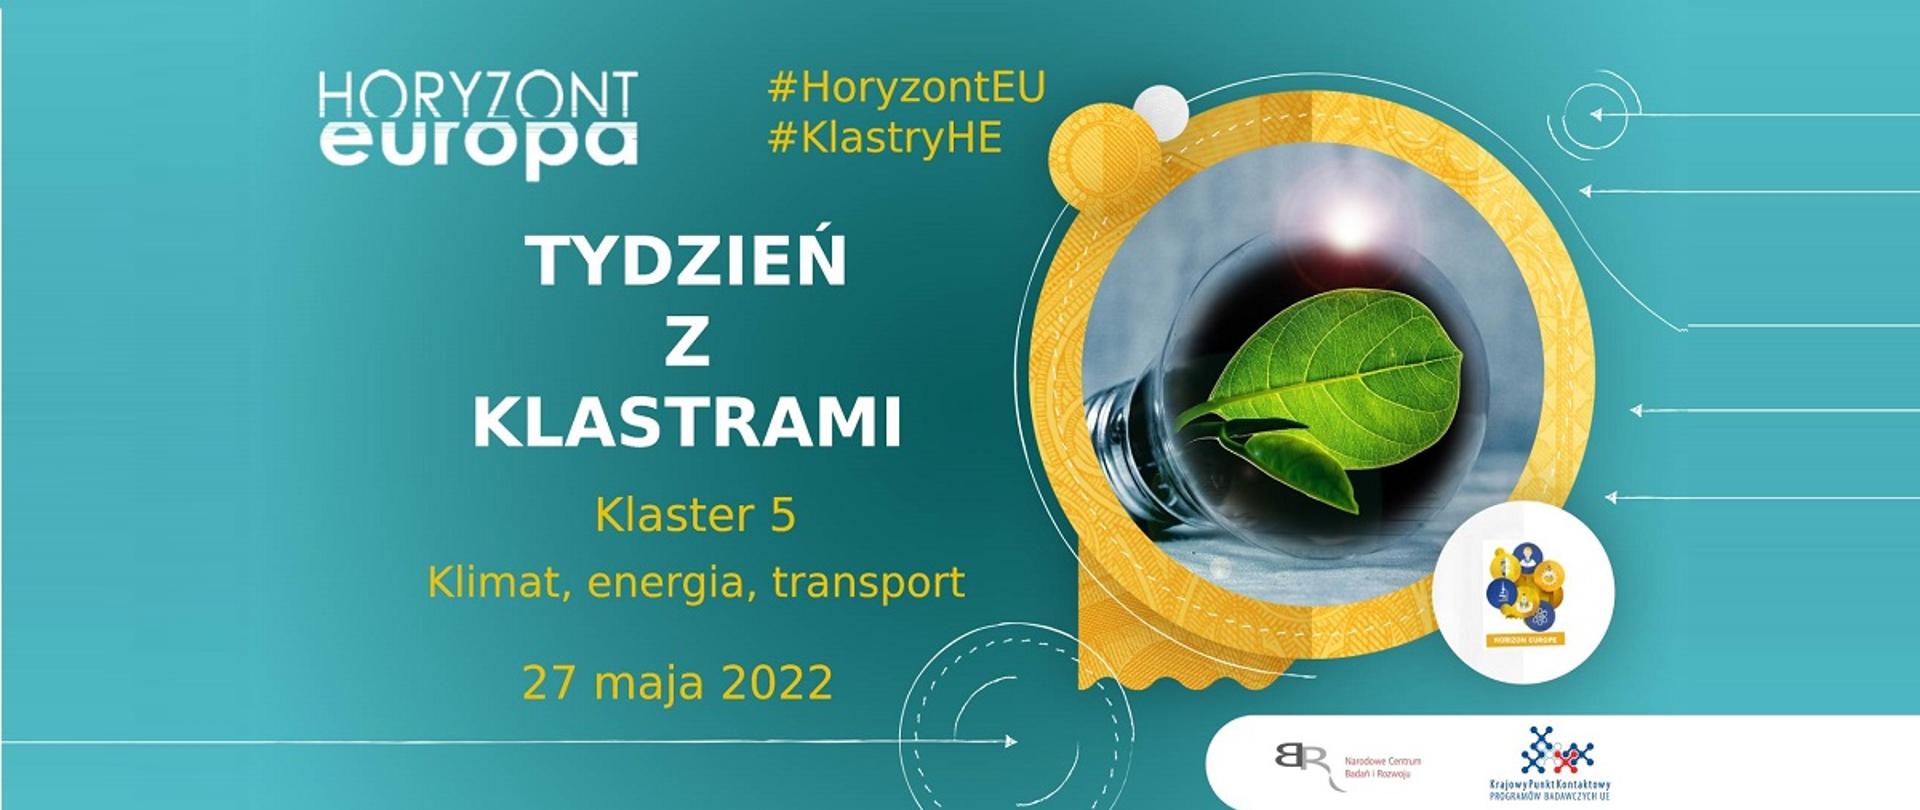 Horyzont Europa
#HoryzontEU
#KlastryHE
Tydzień z klastrami
Klaster 5
Klimat, energia, transport
27 maja 2022